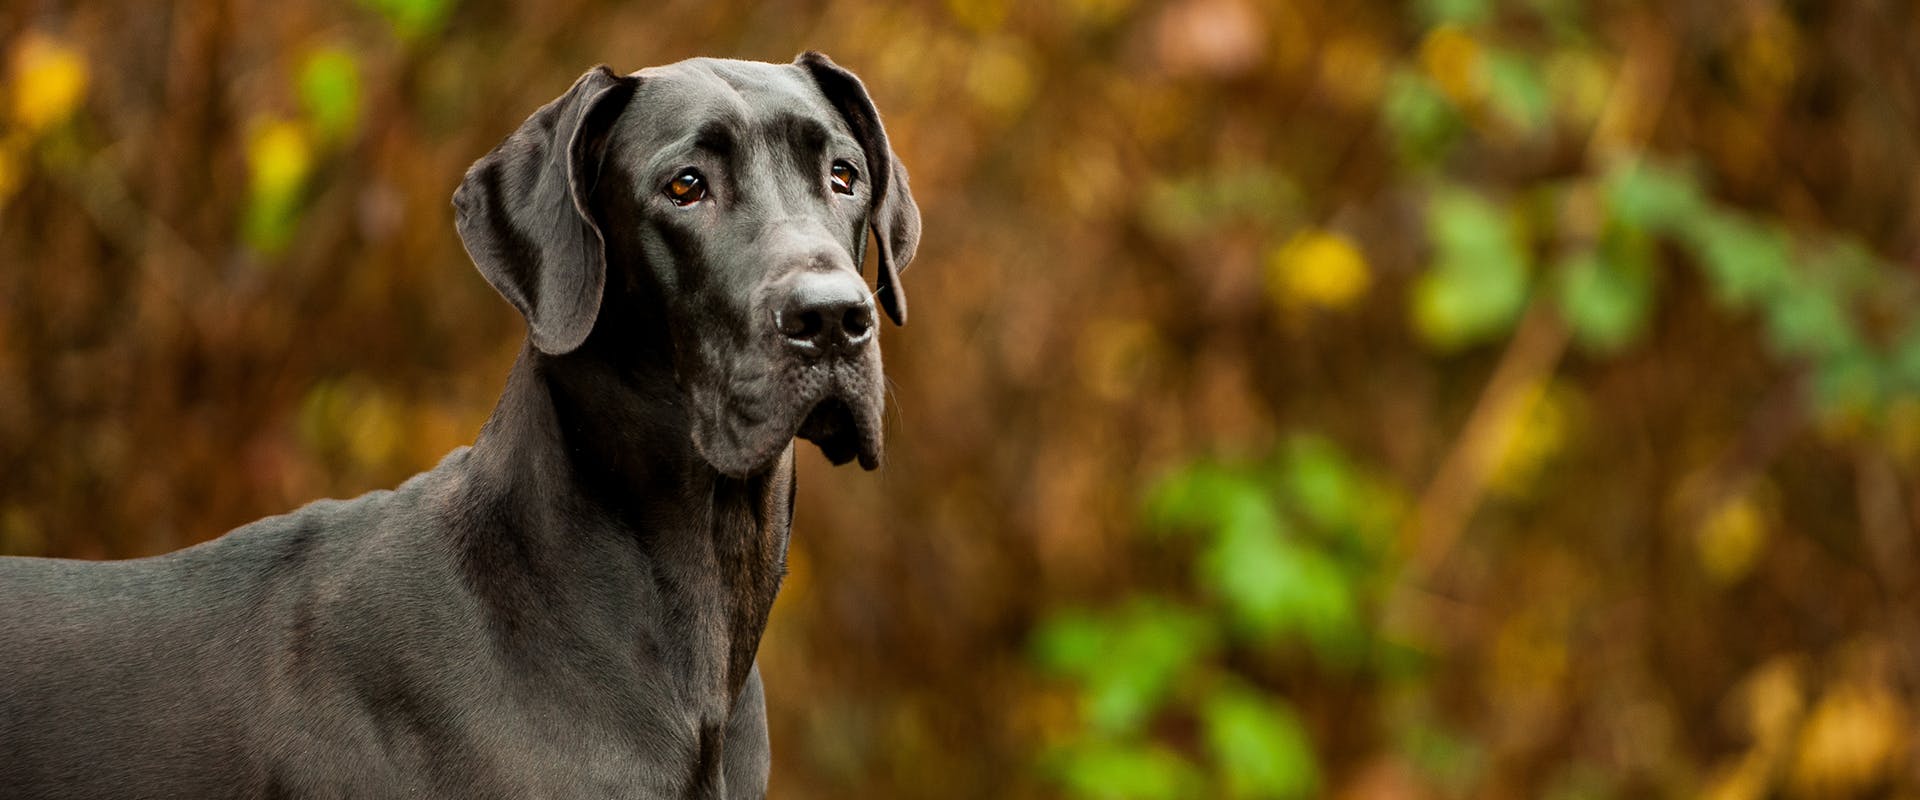 A dog standing outdoors, looking alert